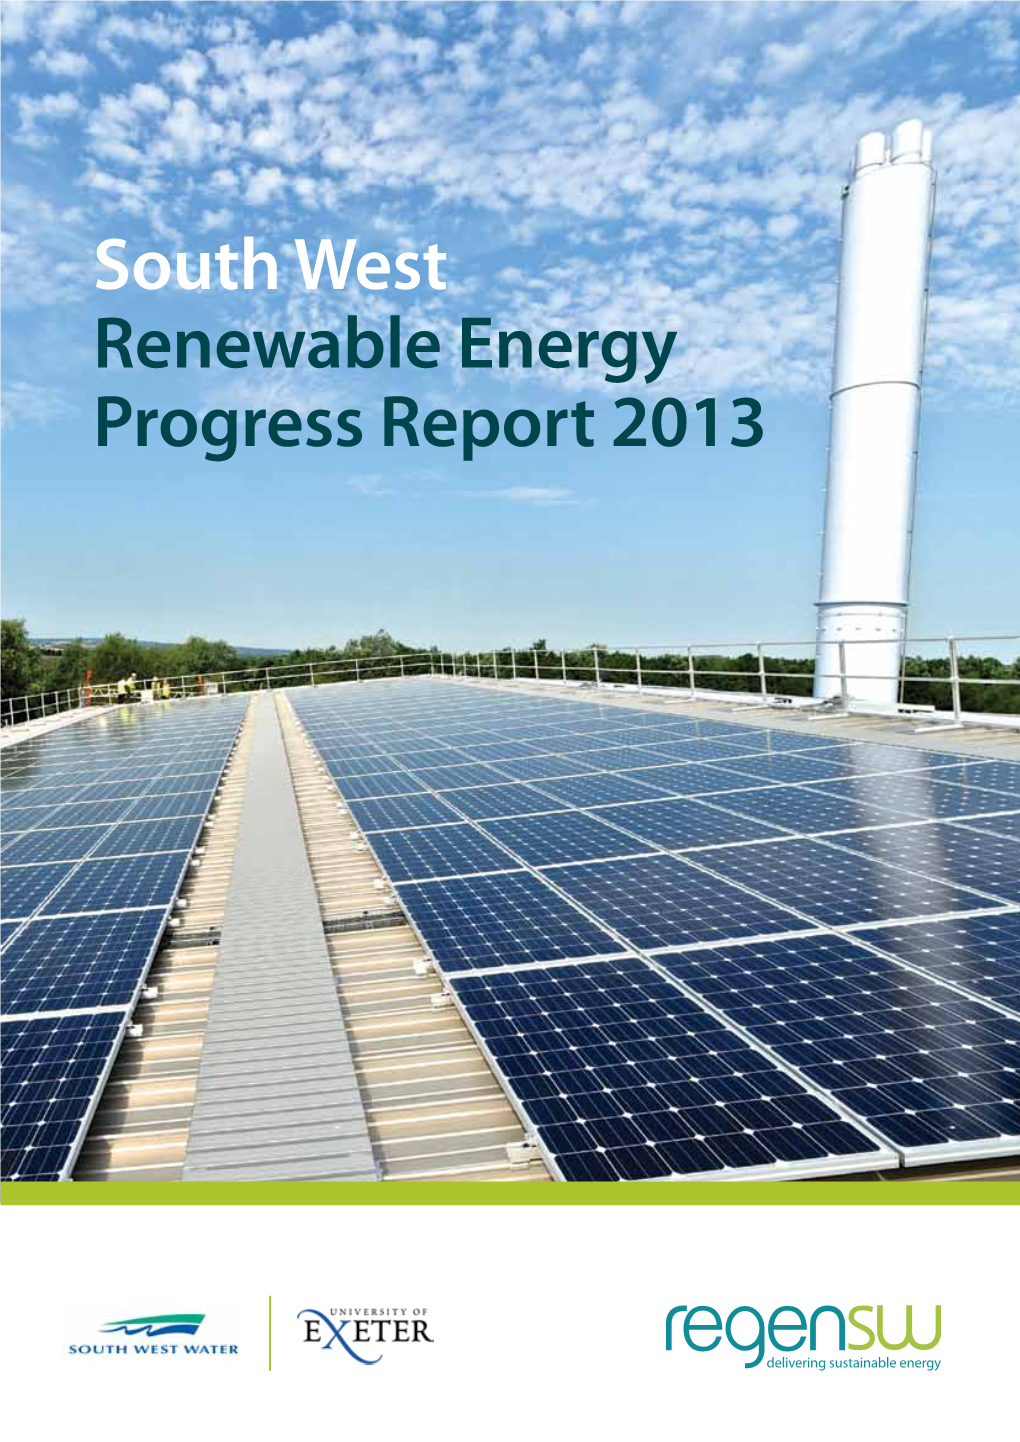 South West Renewable Energy Progress Report 2013 Contents